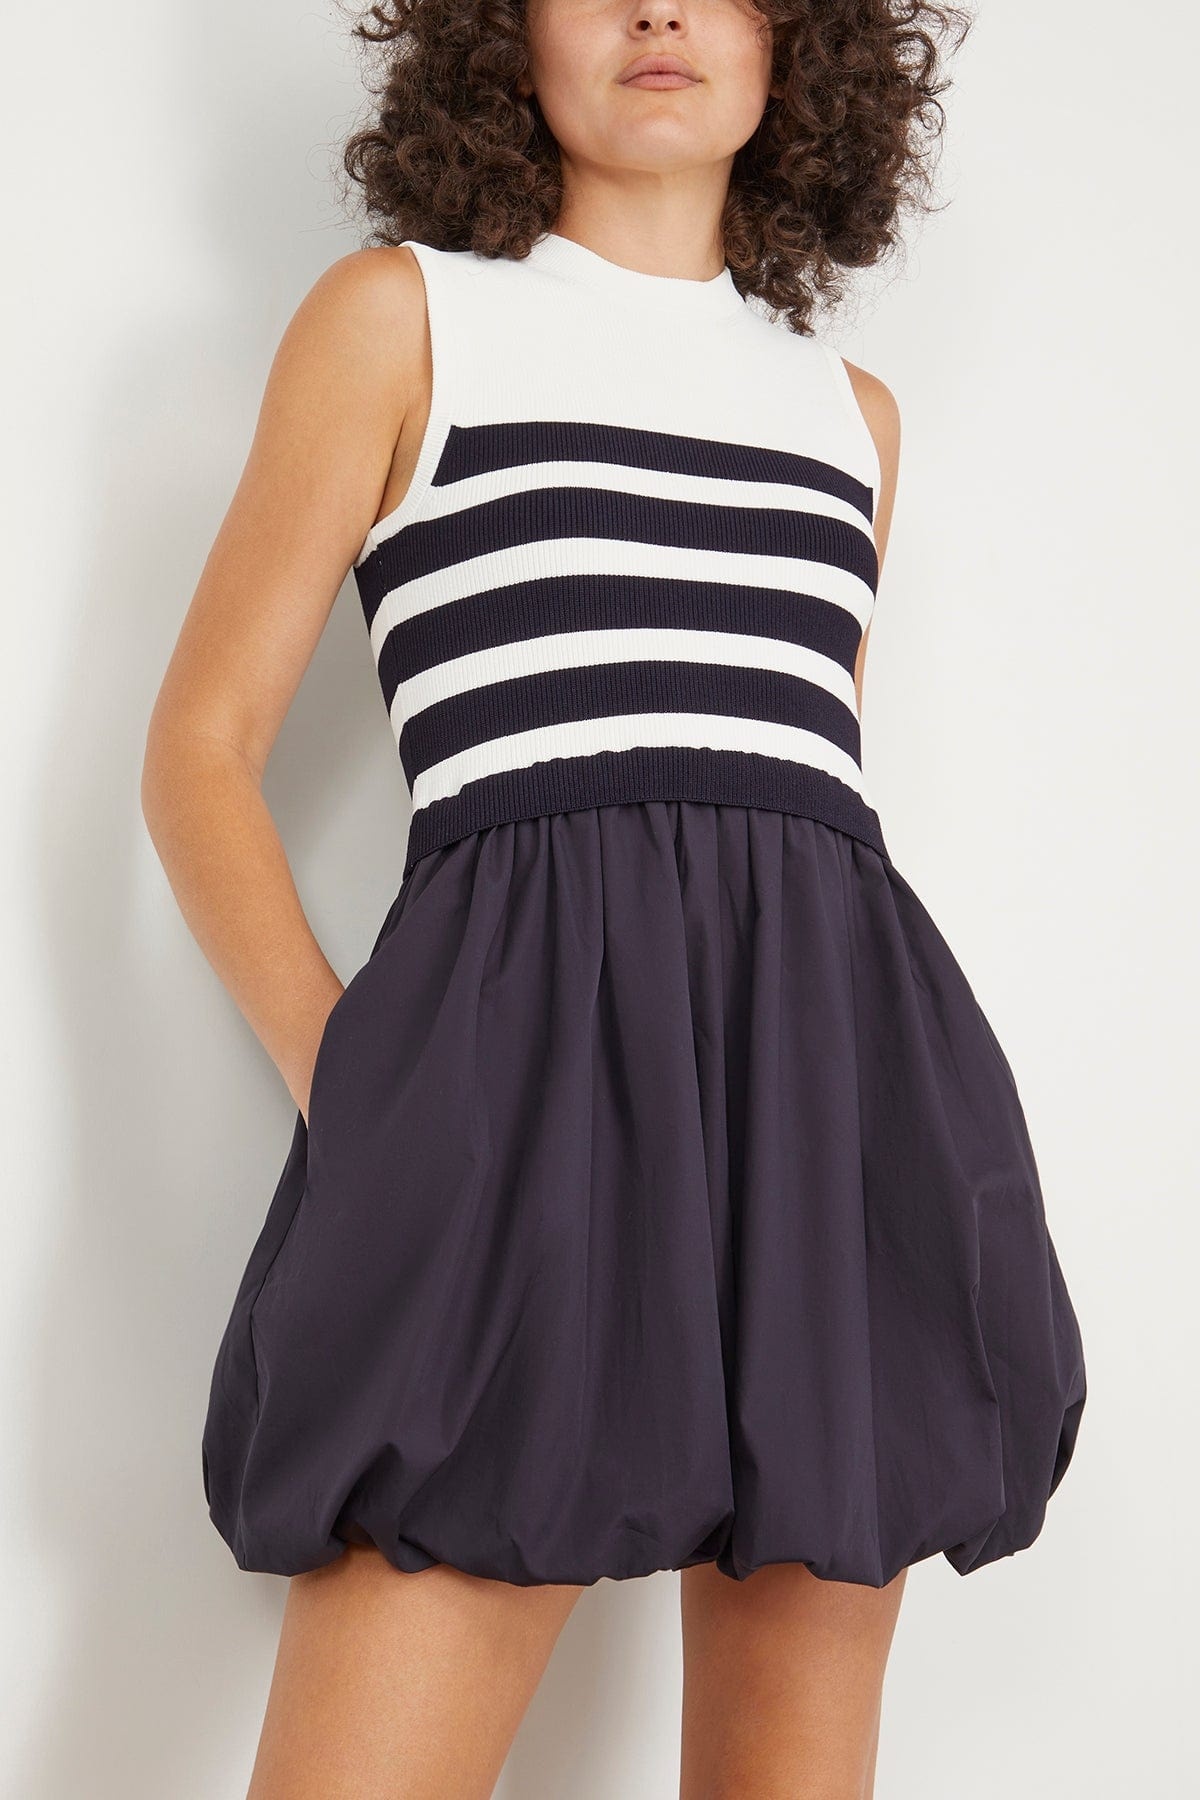 Josey Sleeveless Bubble Skirt Mini Dress in Midnight Stripe - 3